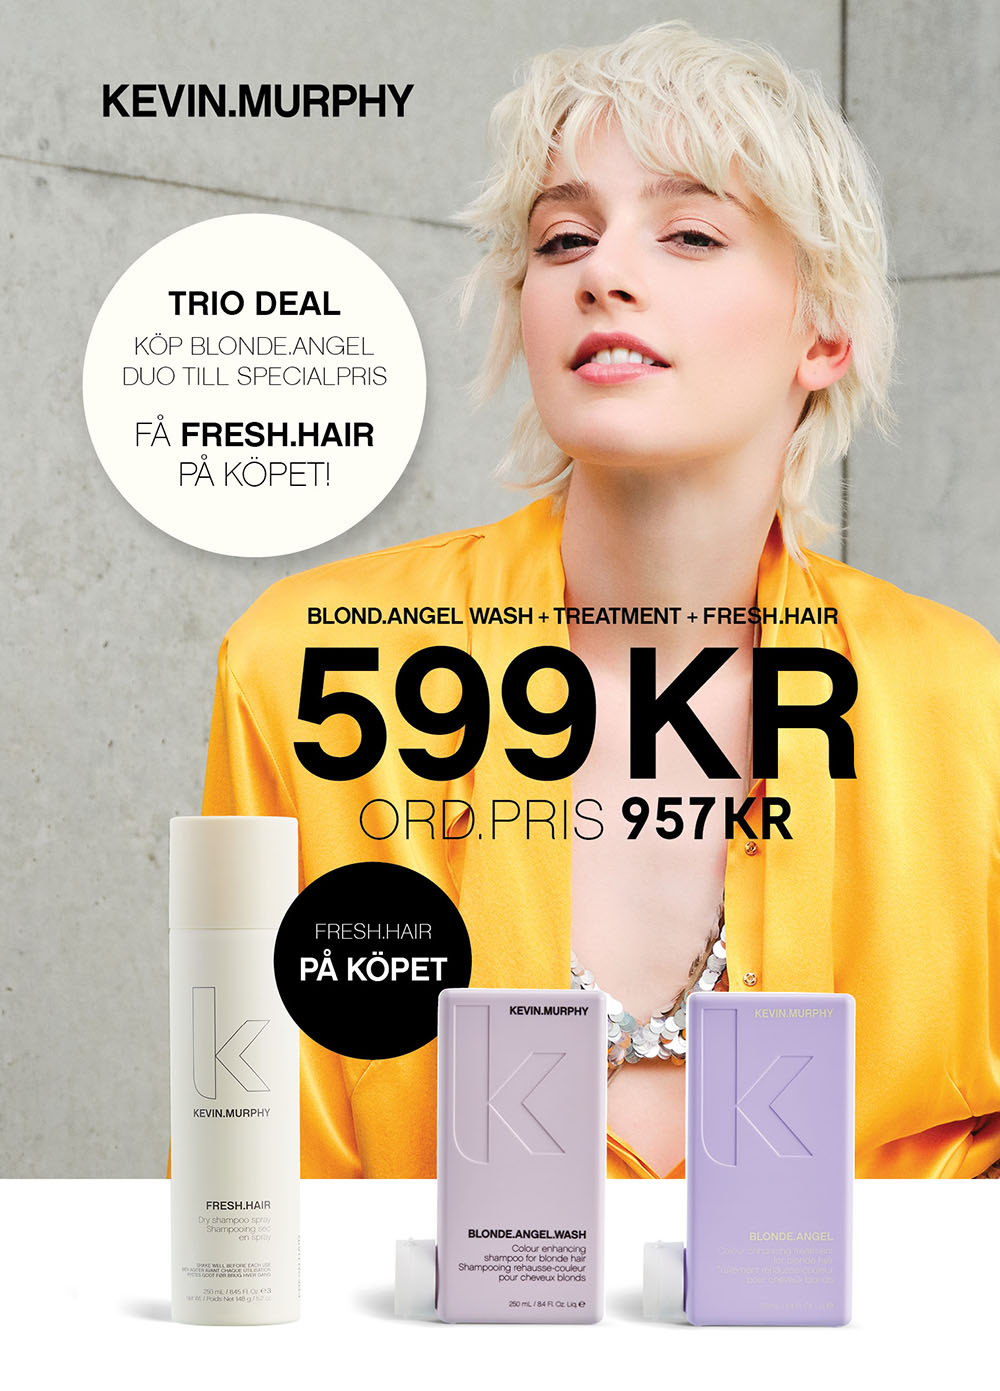 Kevin Murphy Blonde Angel DUO + Fresh Hair p kpet - Hairsale.se